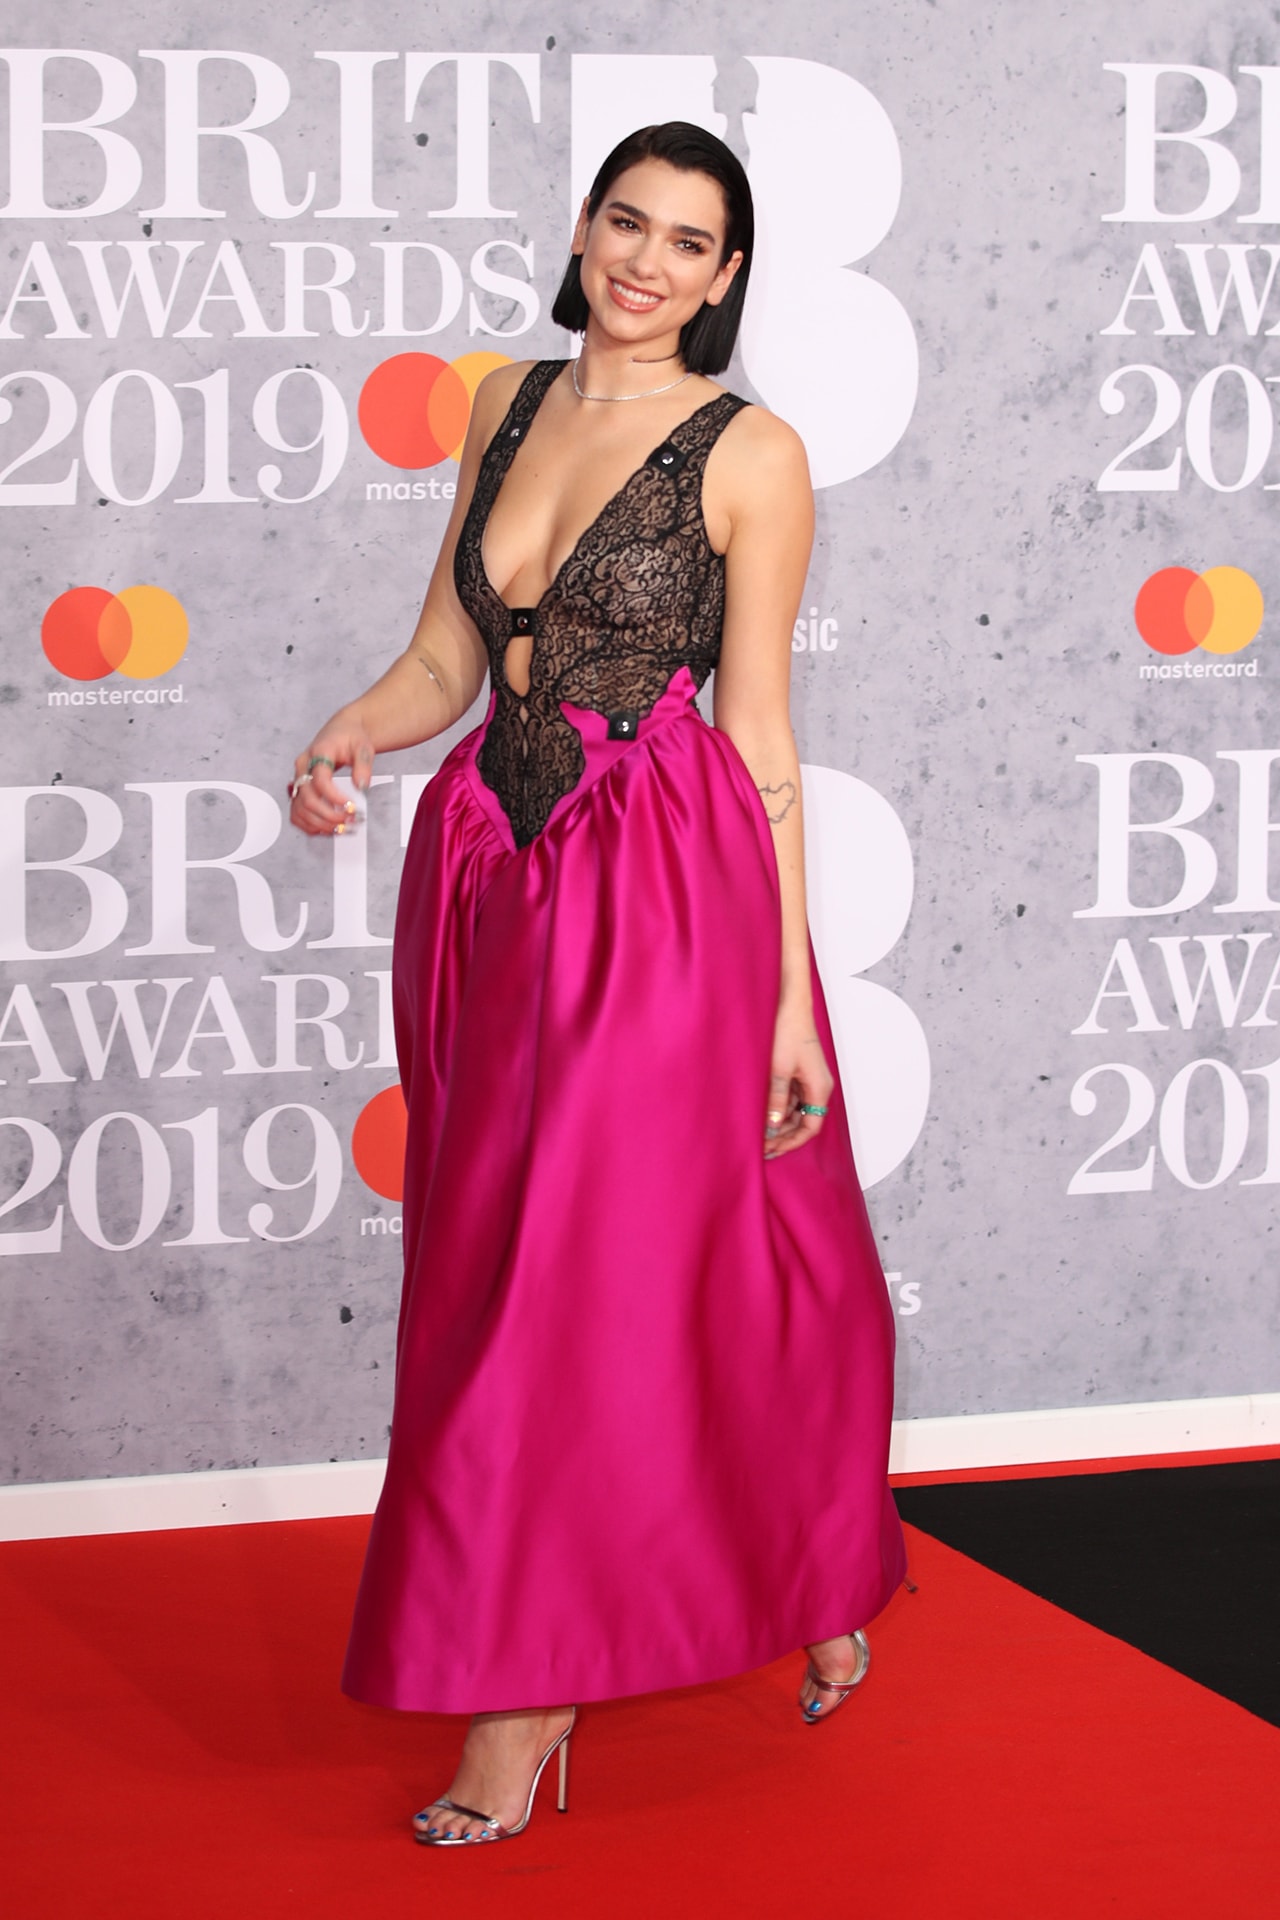 Dua Lipa Brit awards 2019 red carpet dress pink black lace